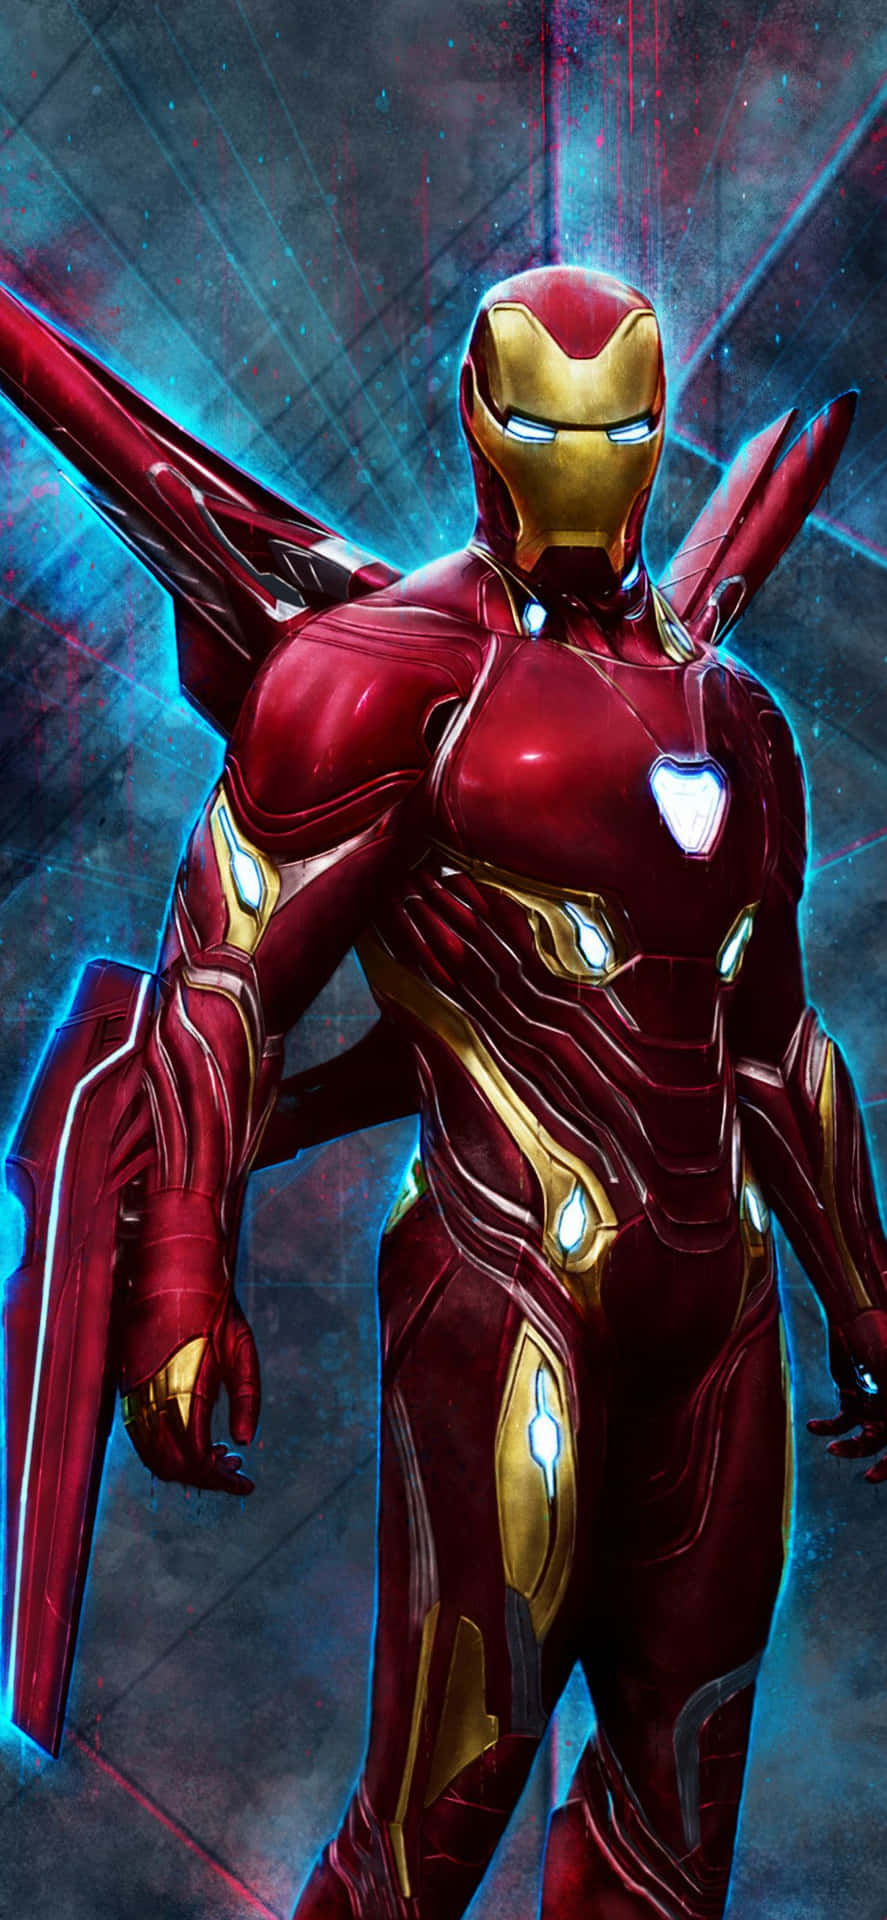 Desatael Poder De Iron Man Con El Iphone X. Fondo de pantalla